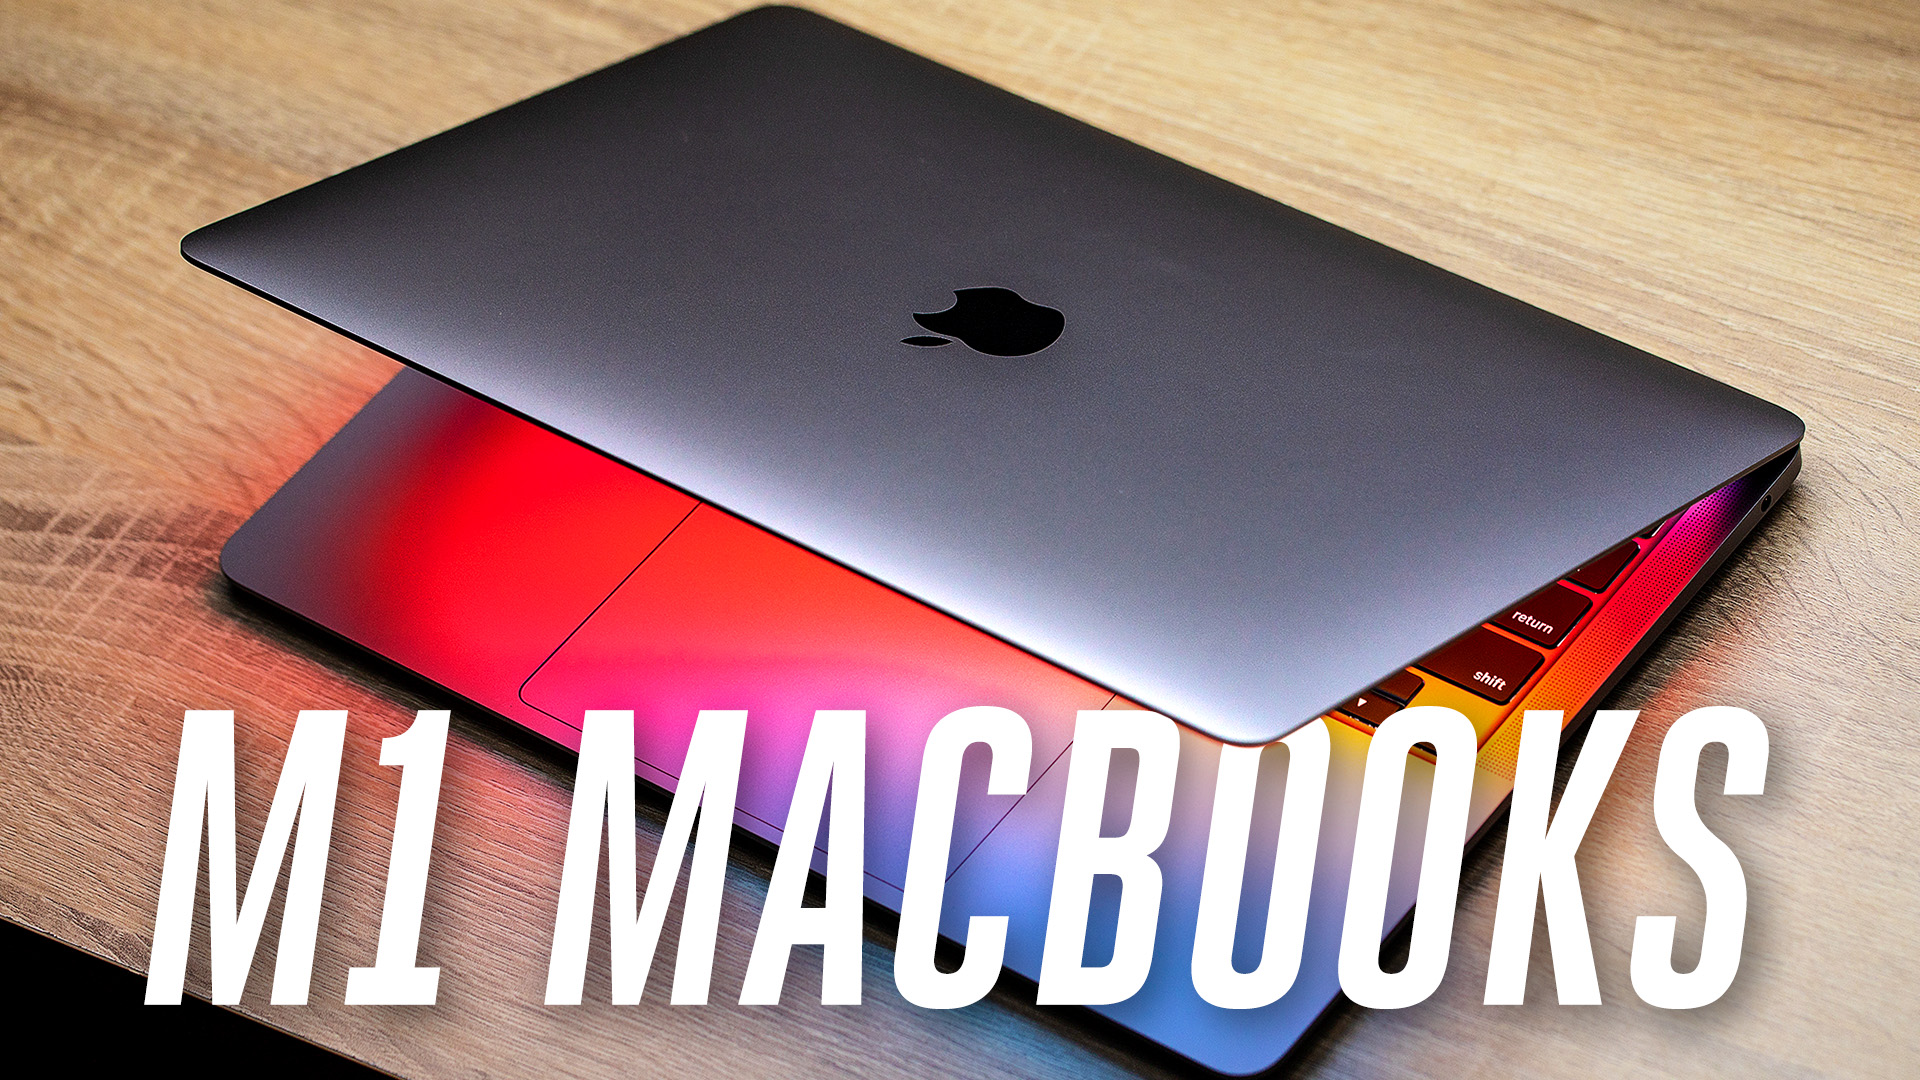 Apple Mac mini (M1, Late 2020) Review